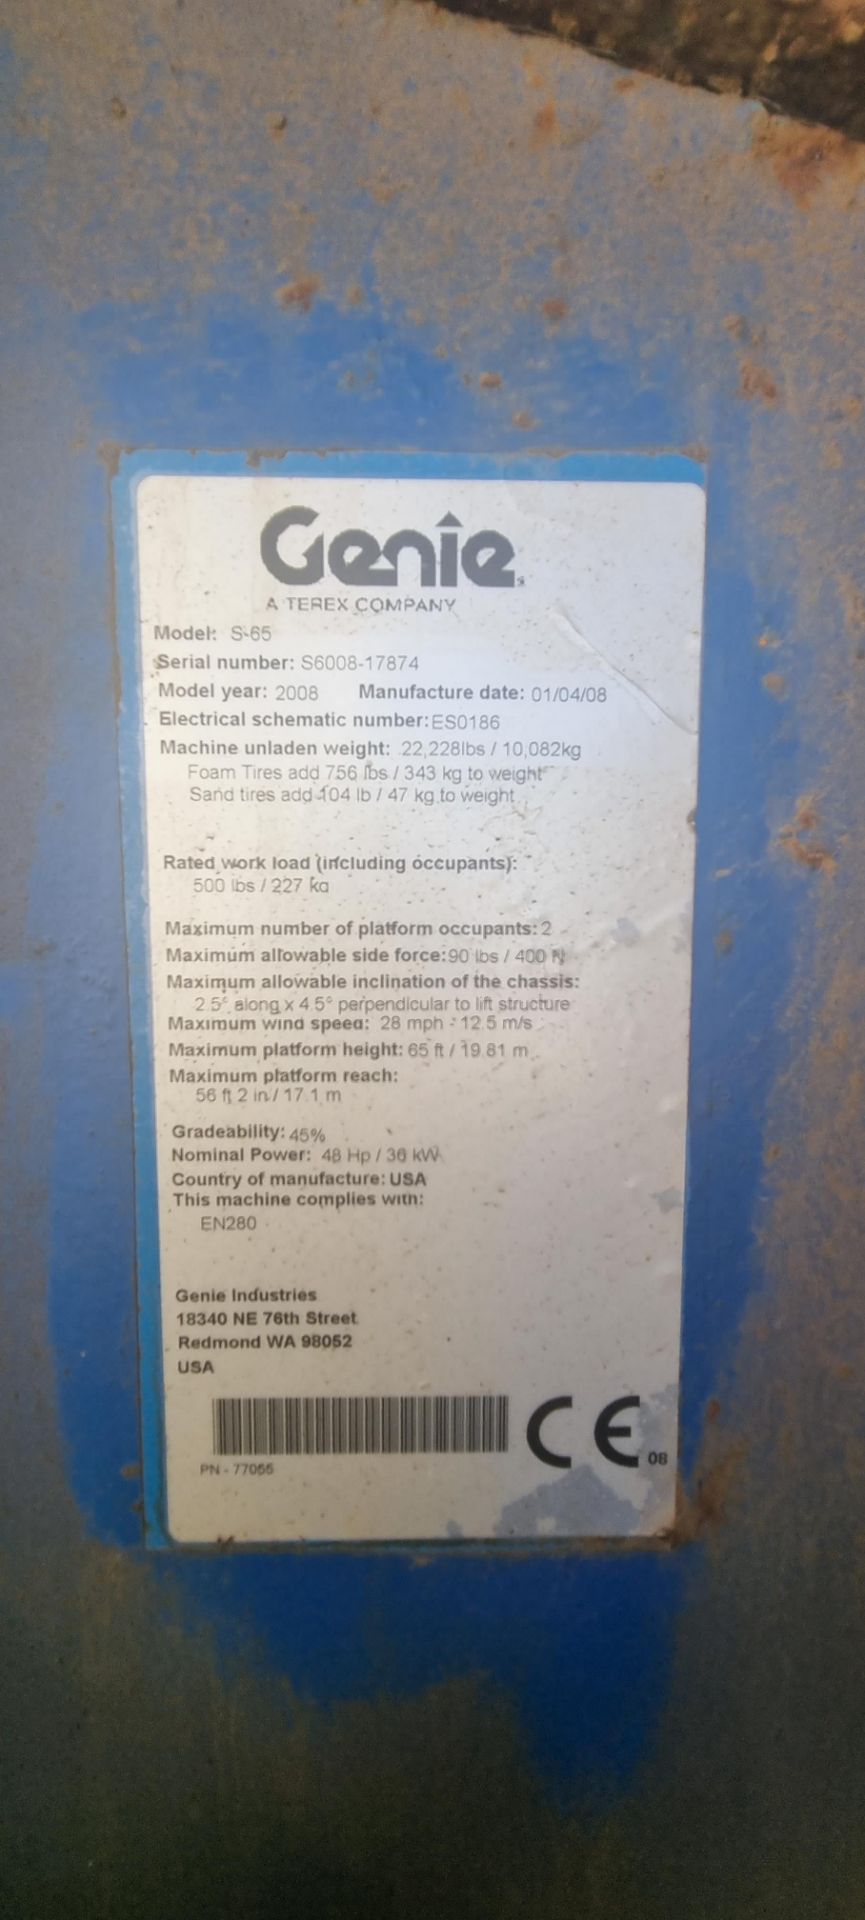 Genie S-65 4x4 Access Platform - Serial No. S6008-17874 (2008) - Image 4 of 4